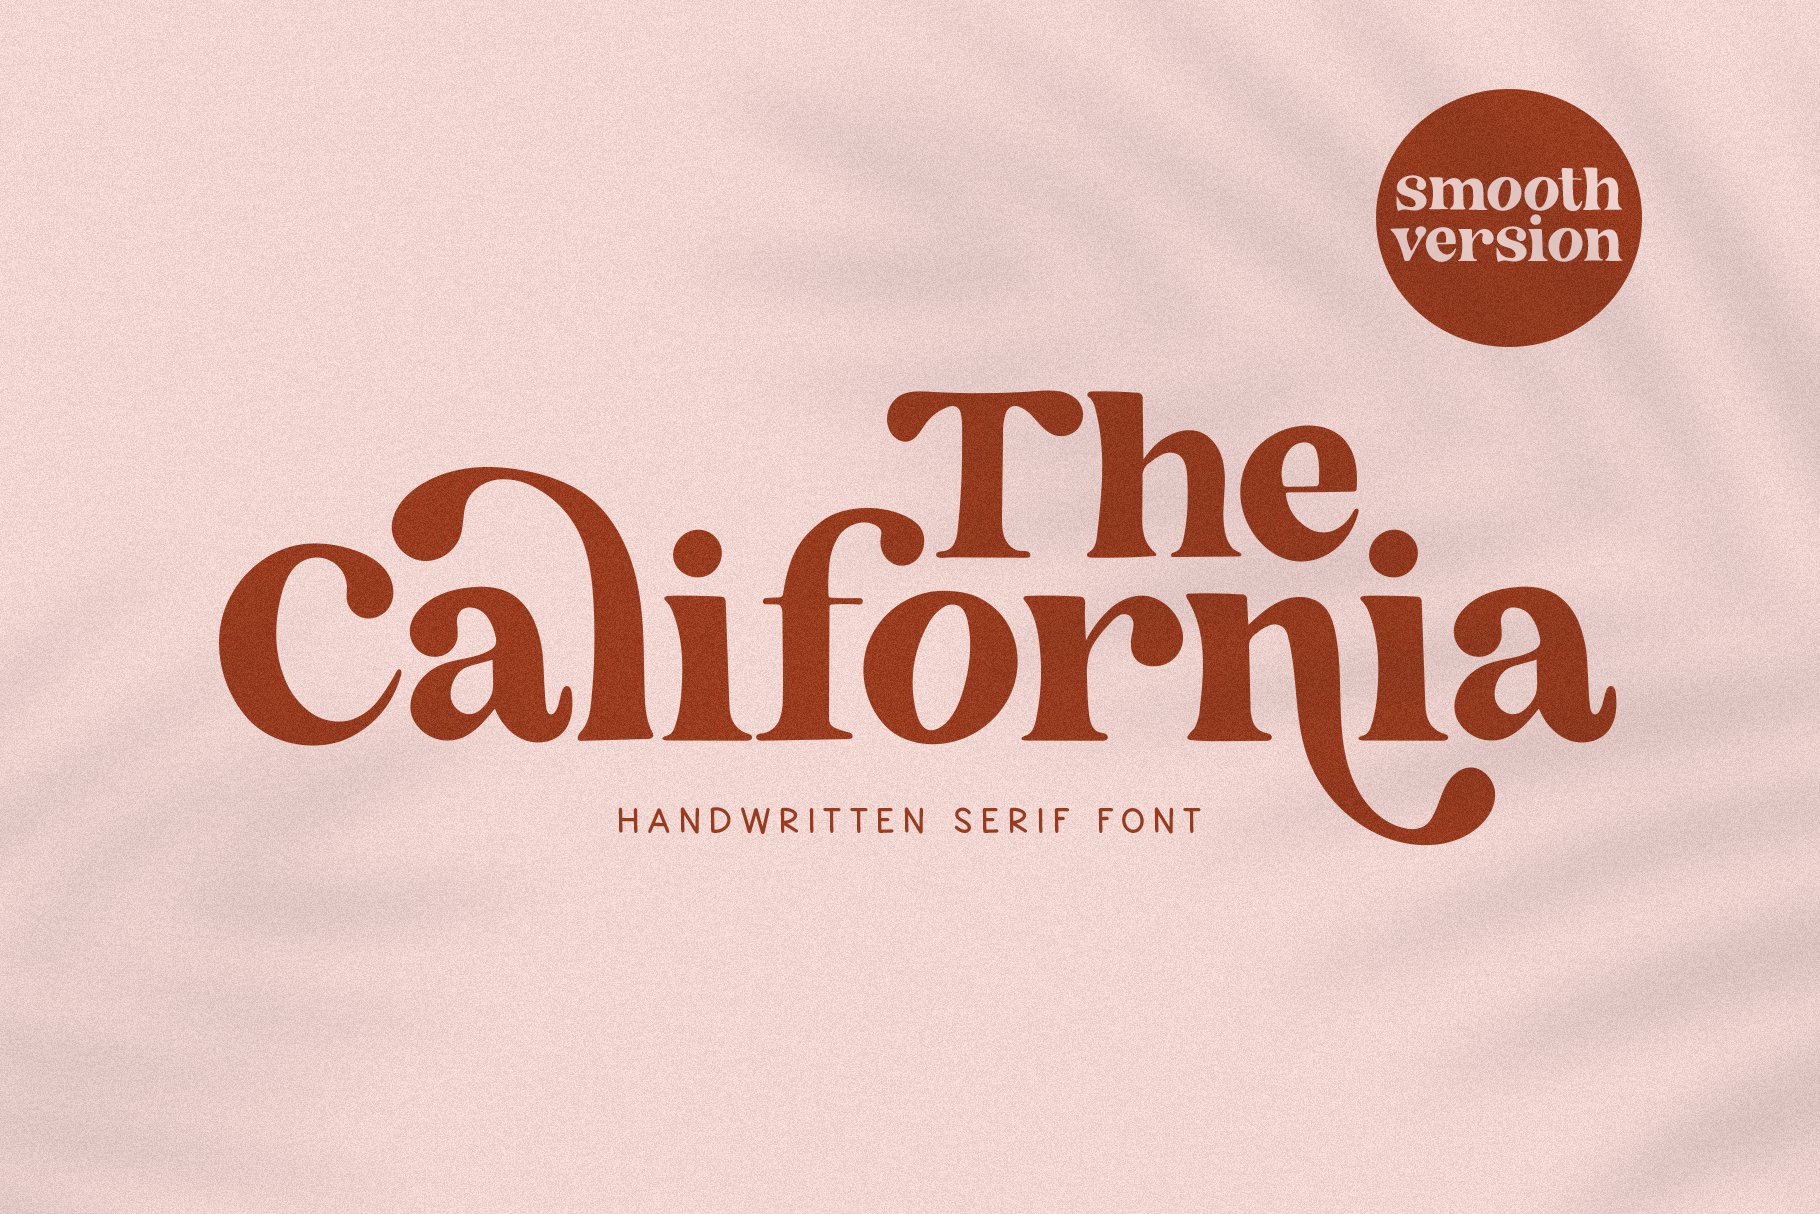 The California | Modern Serif Font cover image.